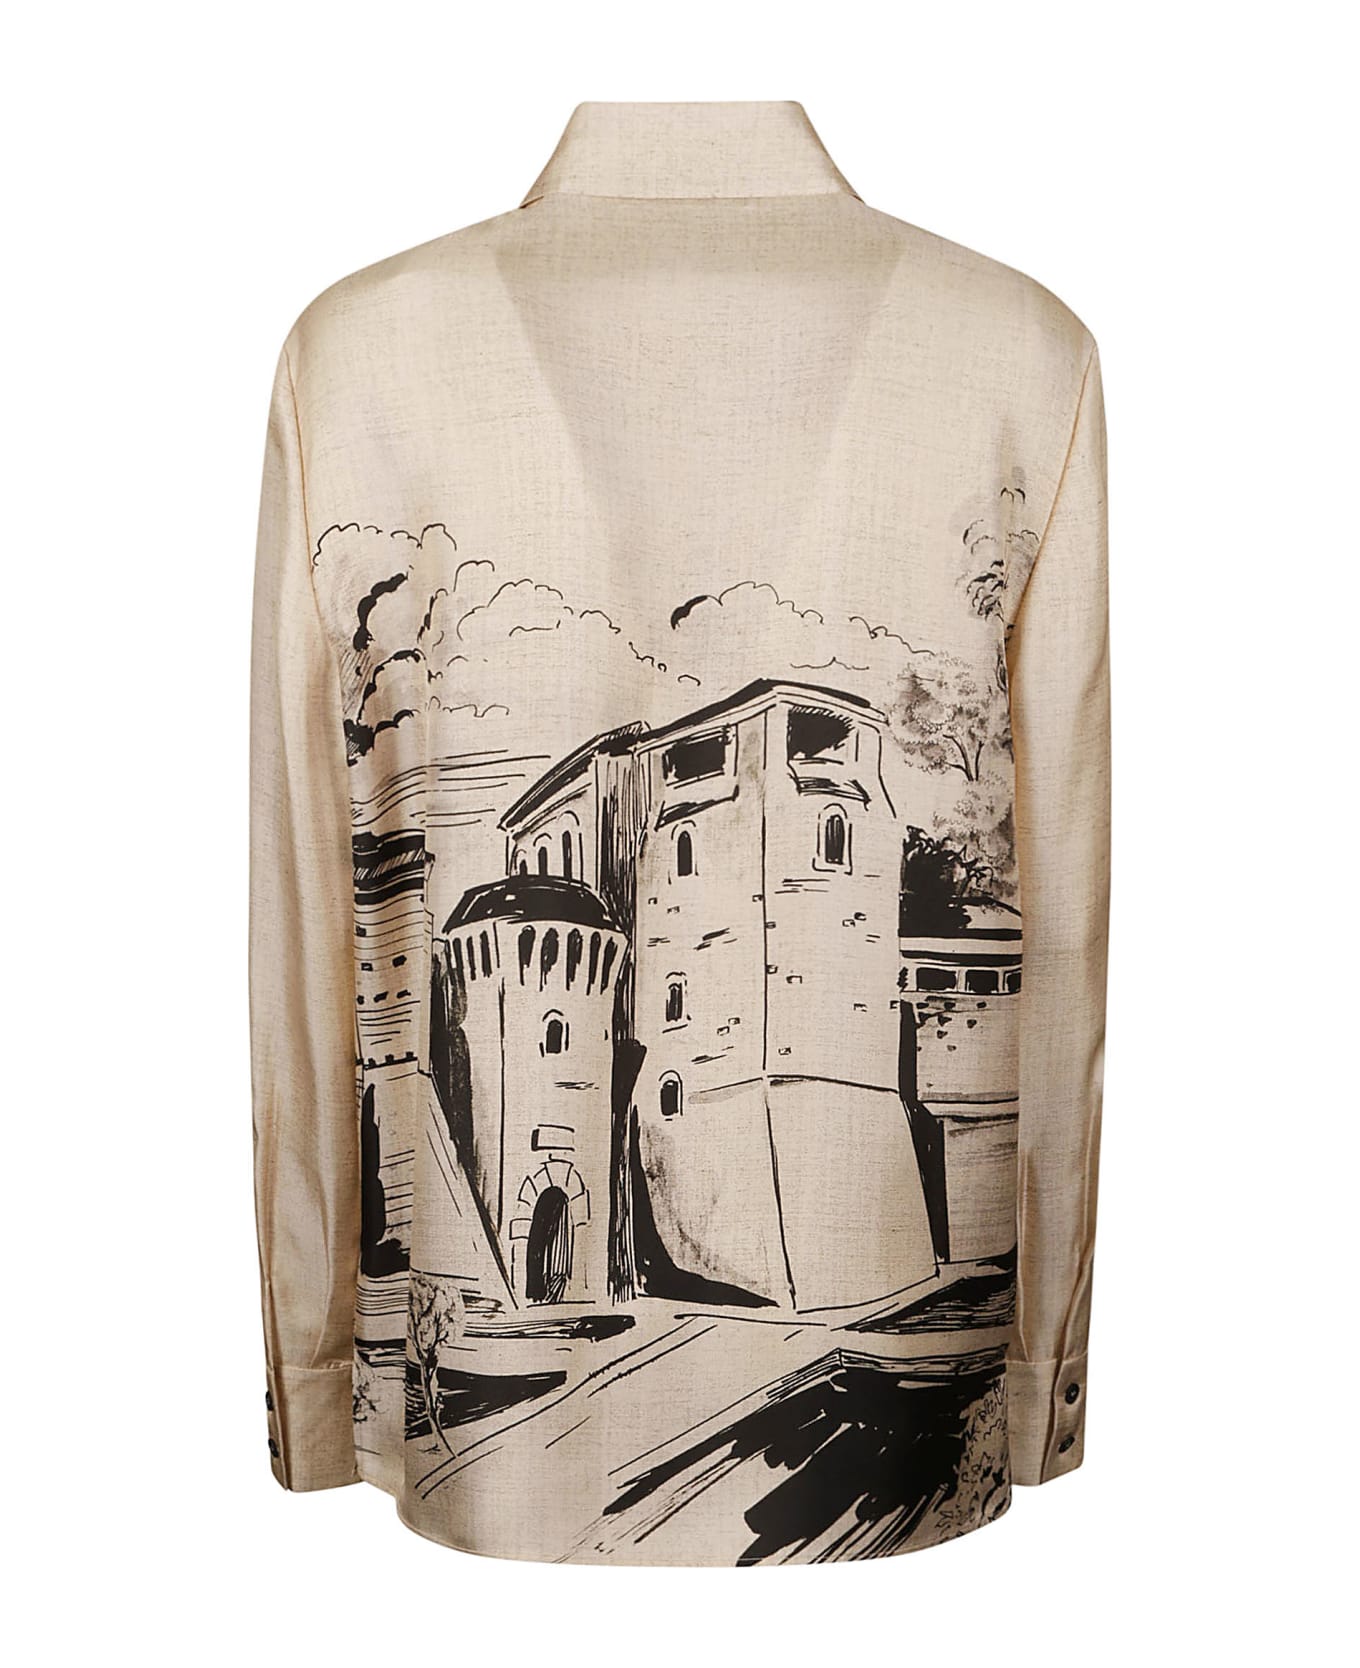 Alberta Ferretti Printed Long-sleeved Shirt - Beige